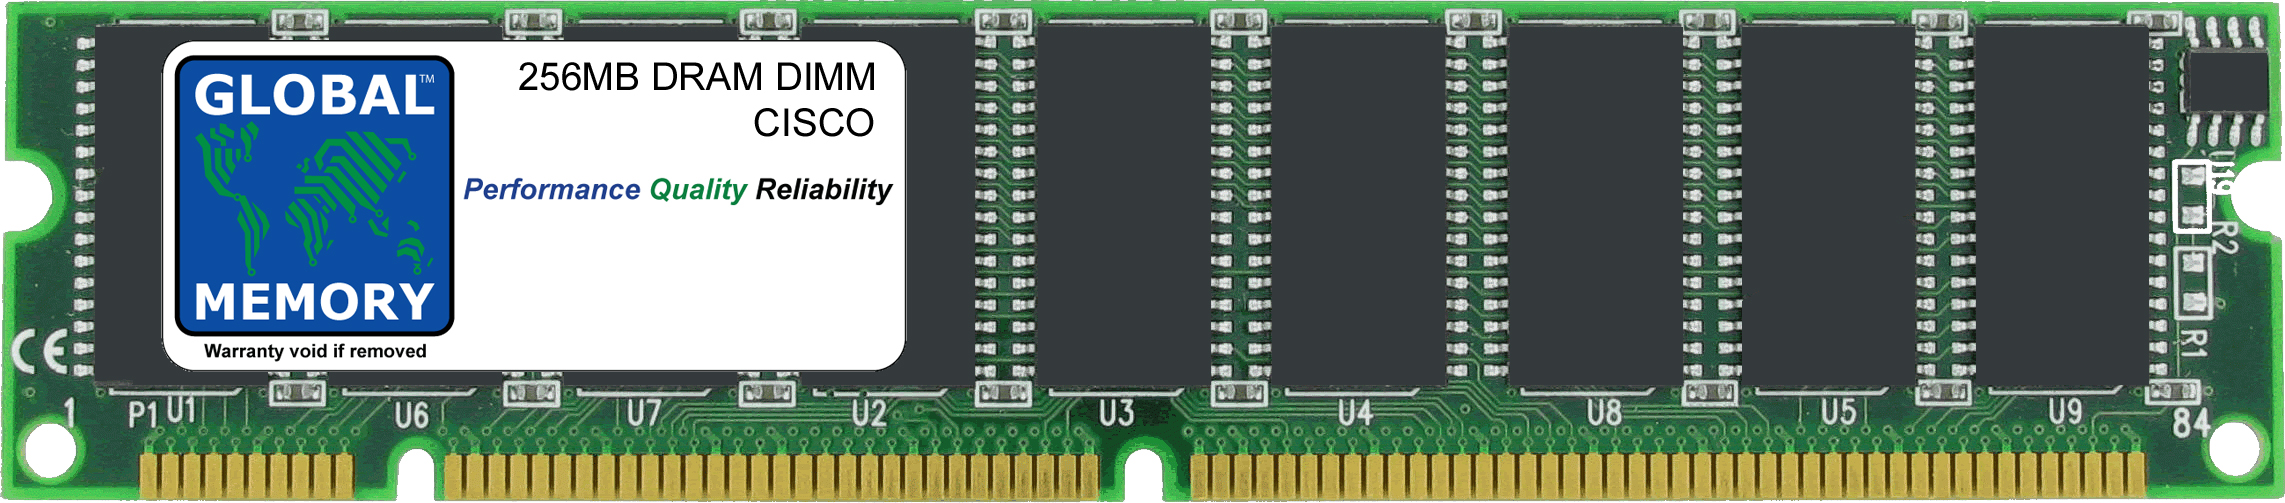 256MB DRAM DIMM MEMORY RAM FOR CISCO AS5400 / AS5400HPX UNIVERSAL GATEWAY (MEM-256M-AS54)